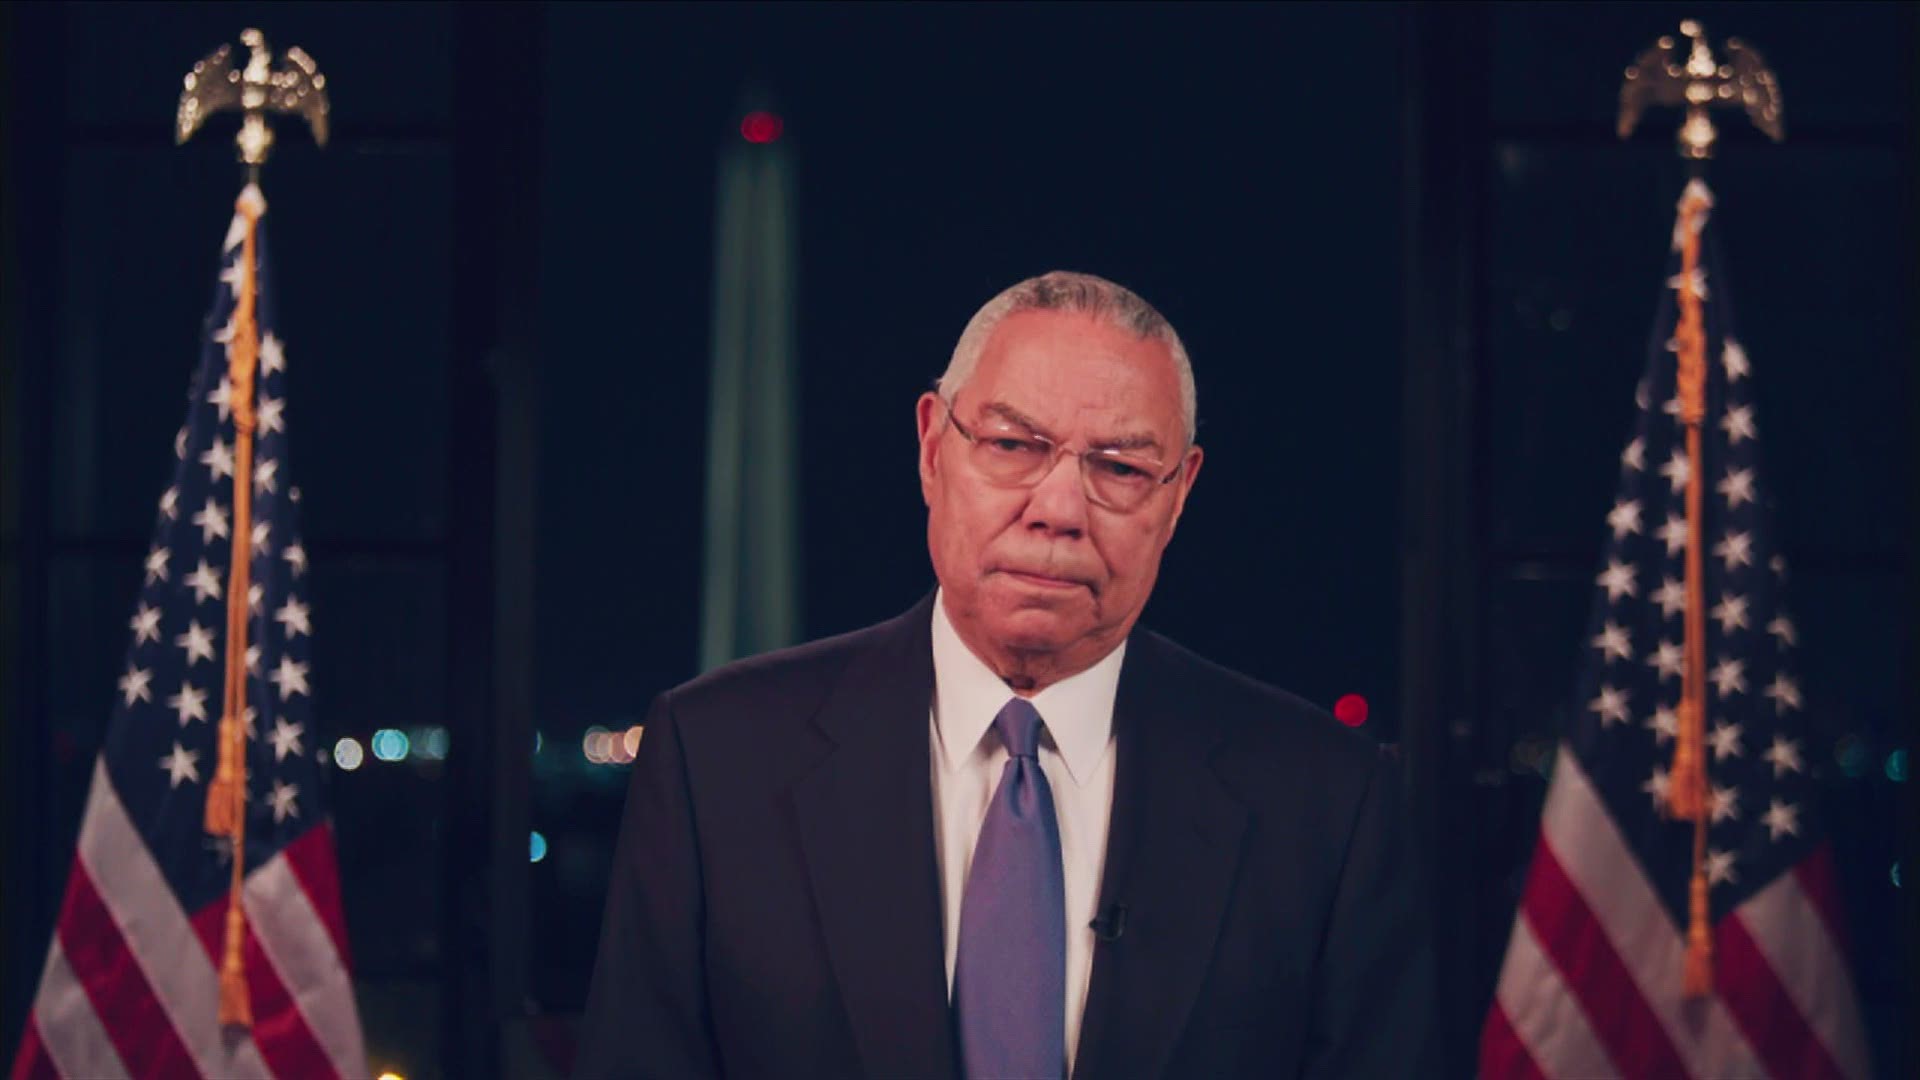 Gen. Colin Powell, member of both Bush administrations, endorses Joe Biden at the Democratic National Convention.